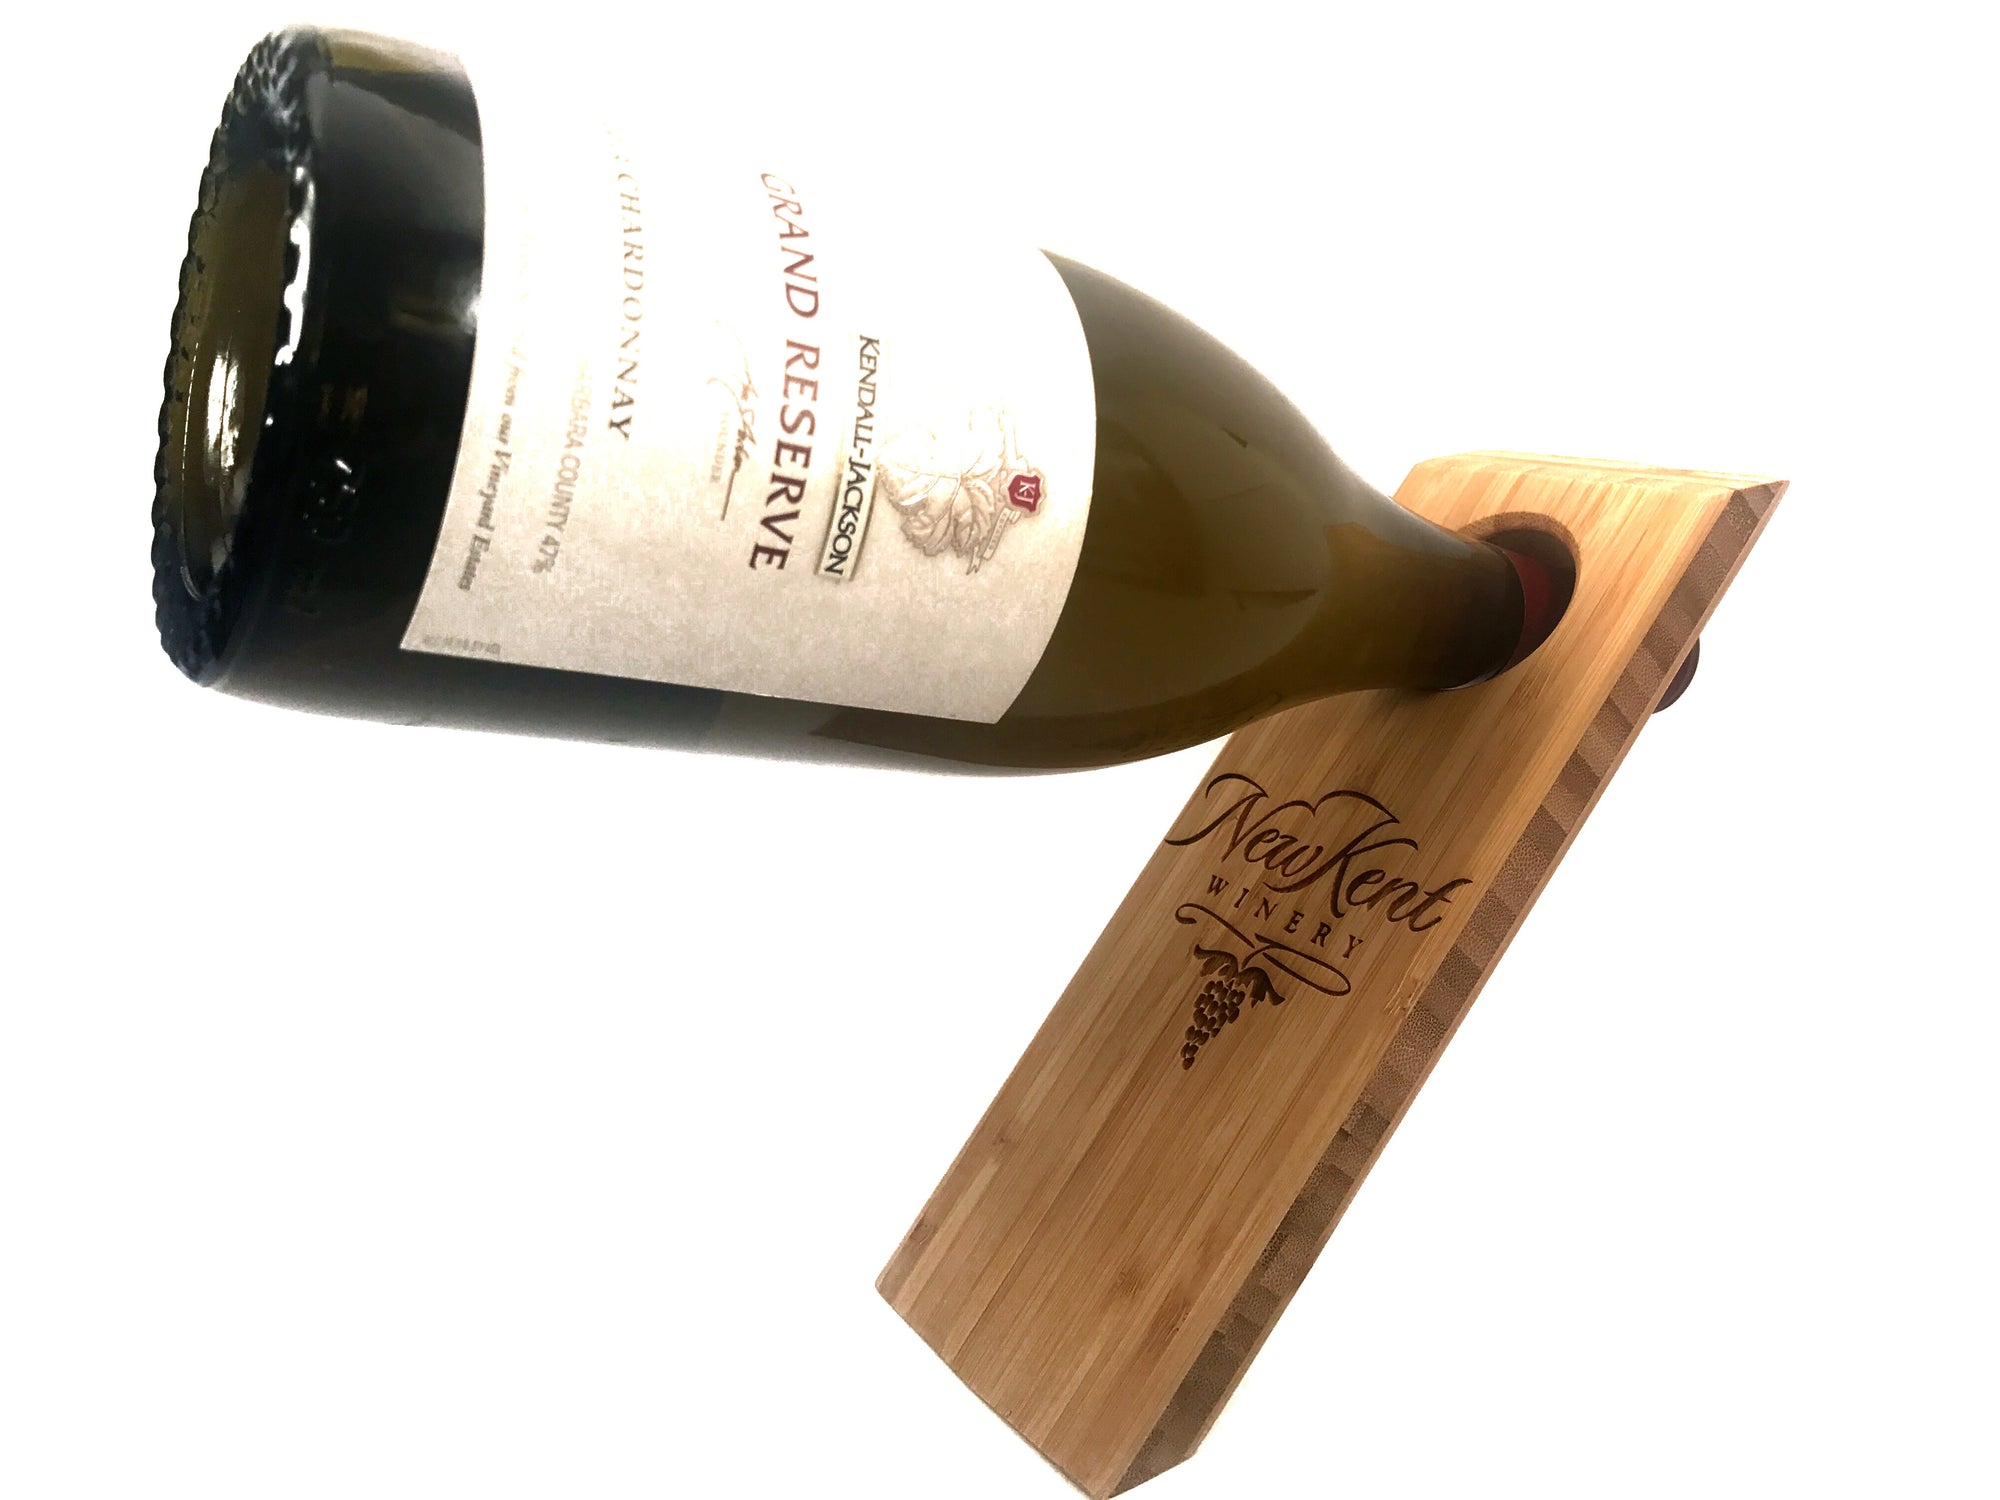 Wine Sleeve Bottle Koozie - Personalized